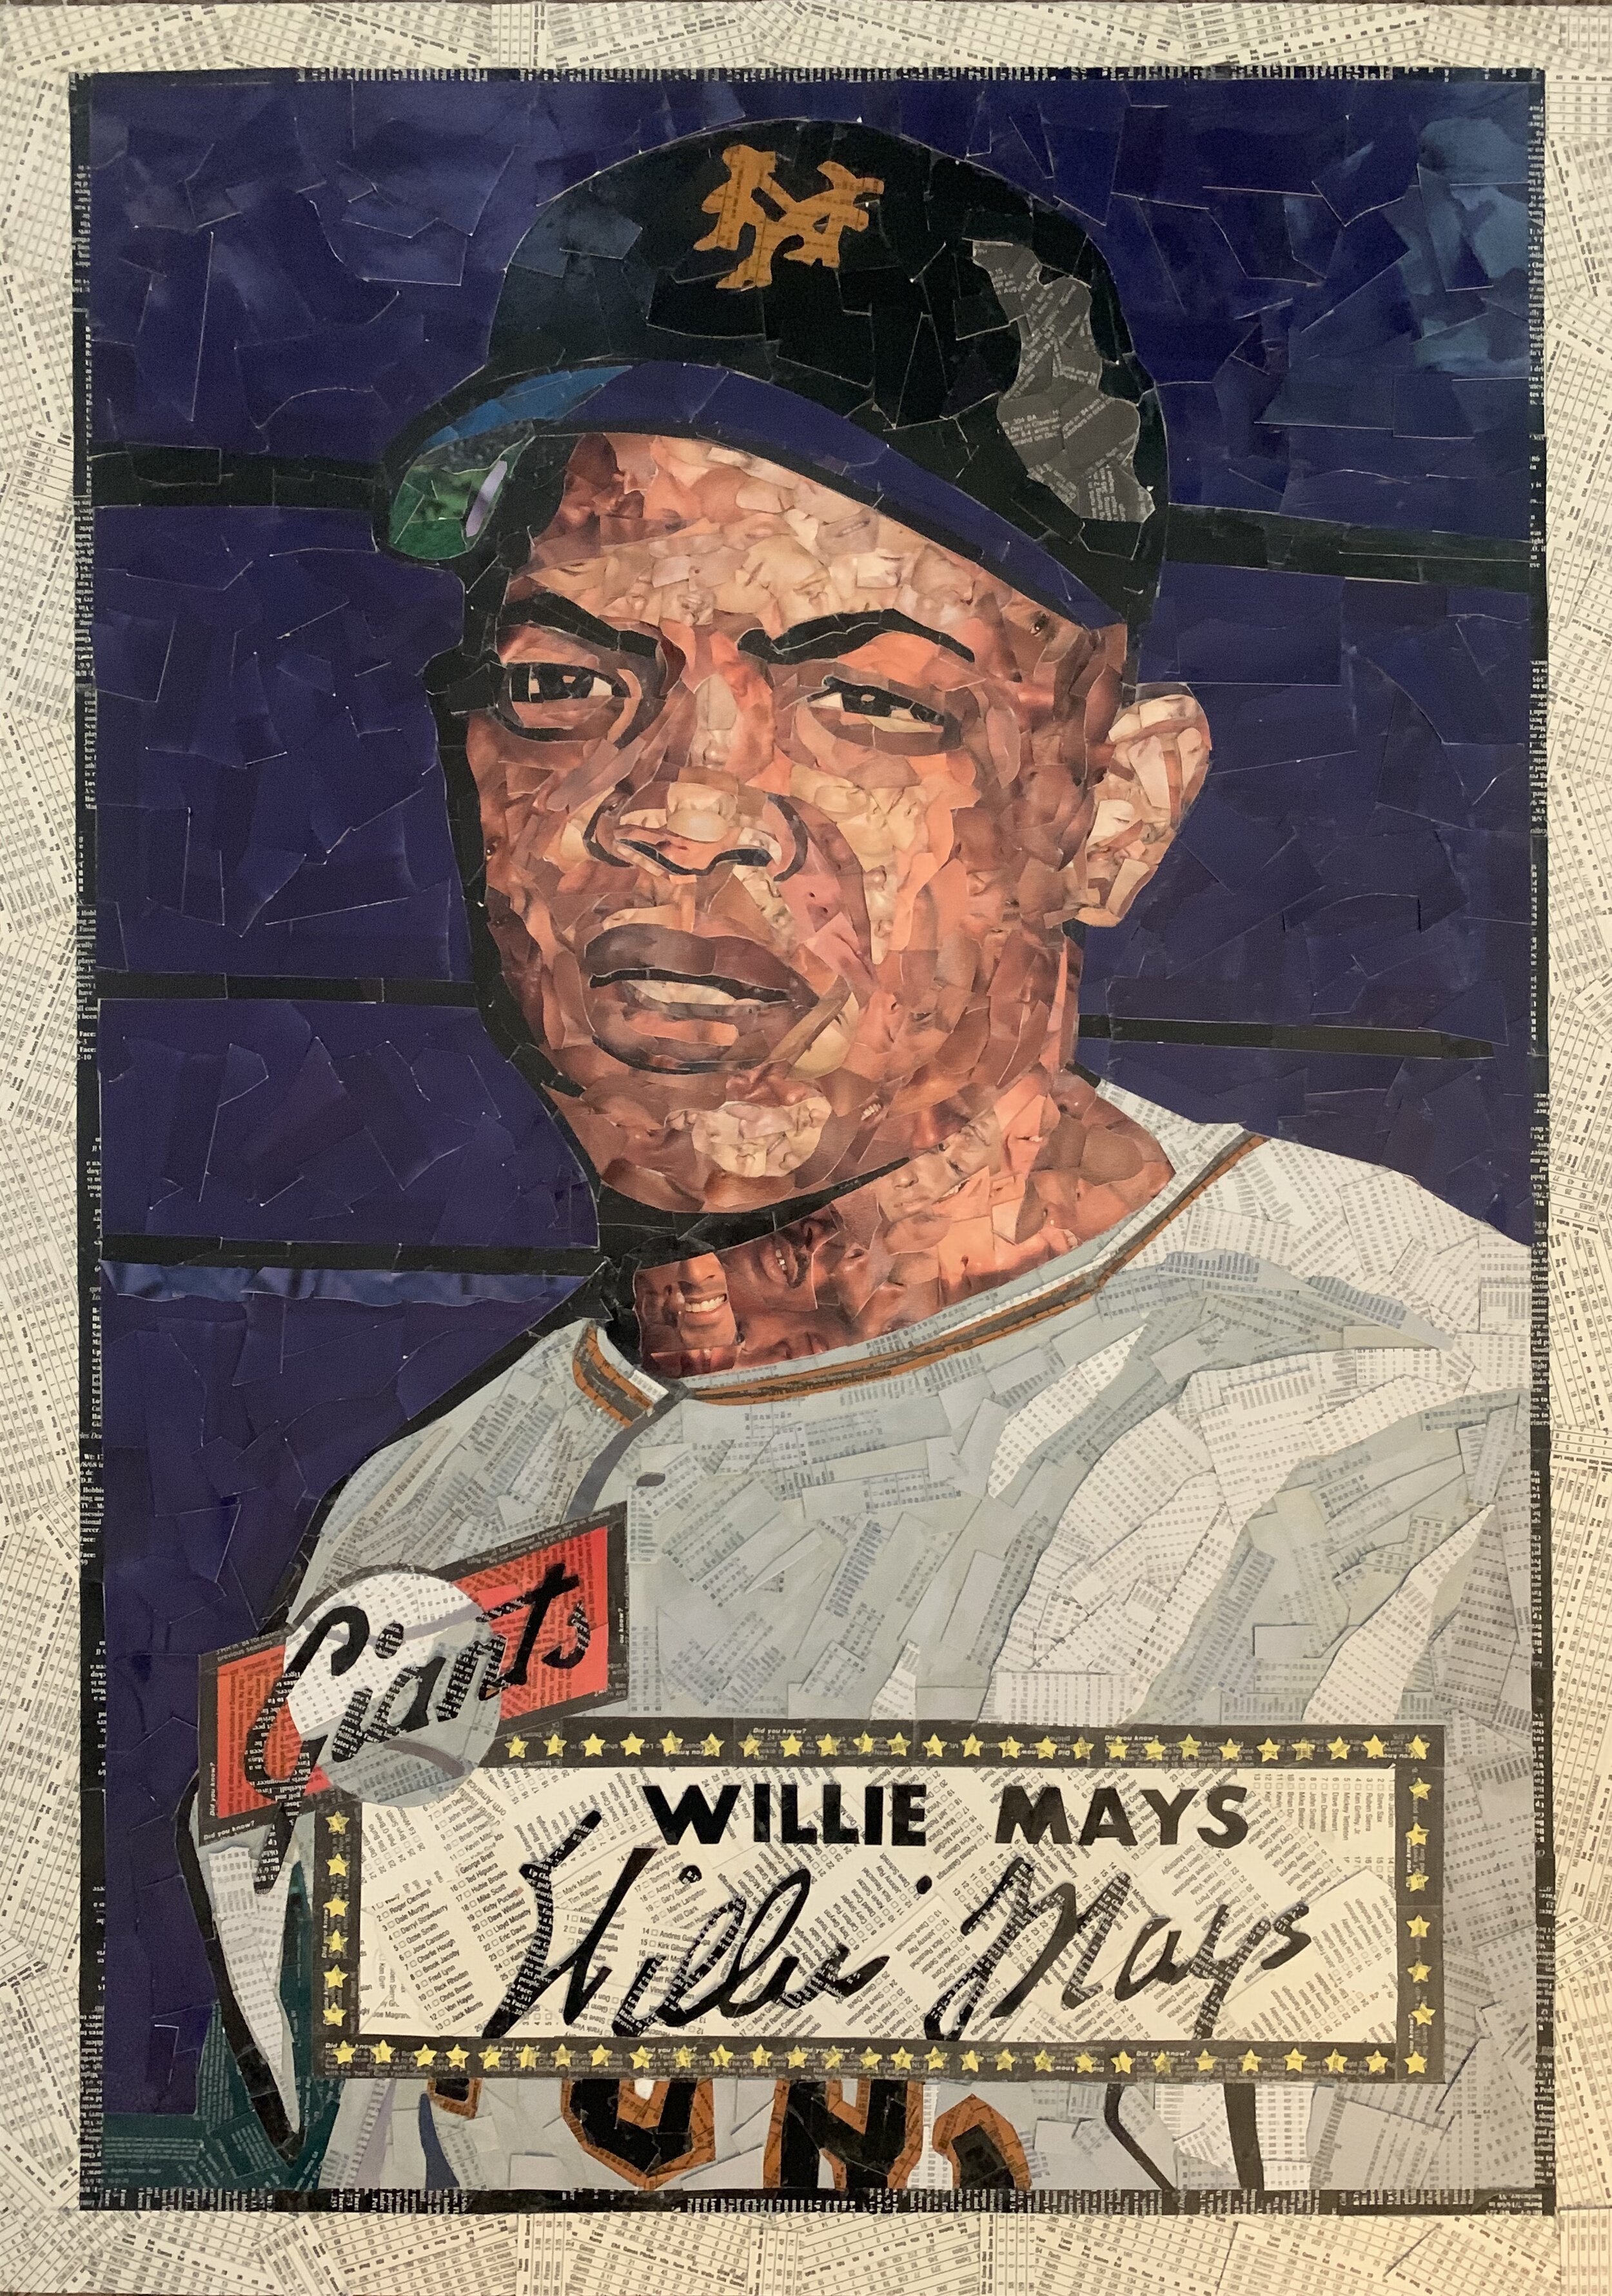 Cut baseball cards; Sold. 